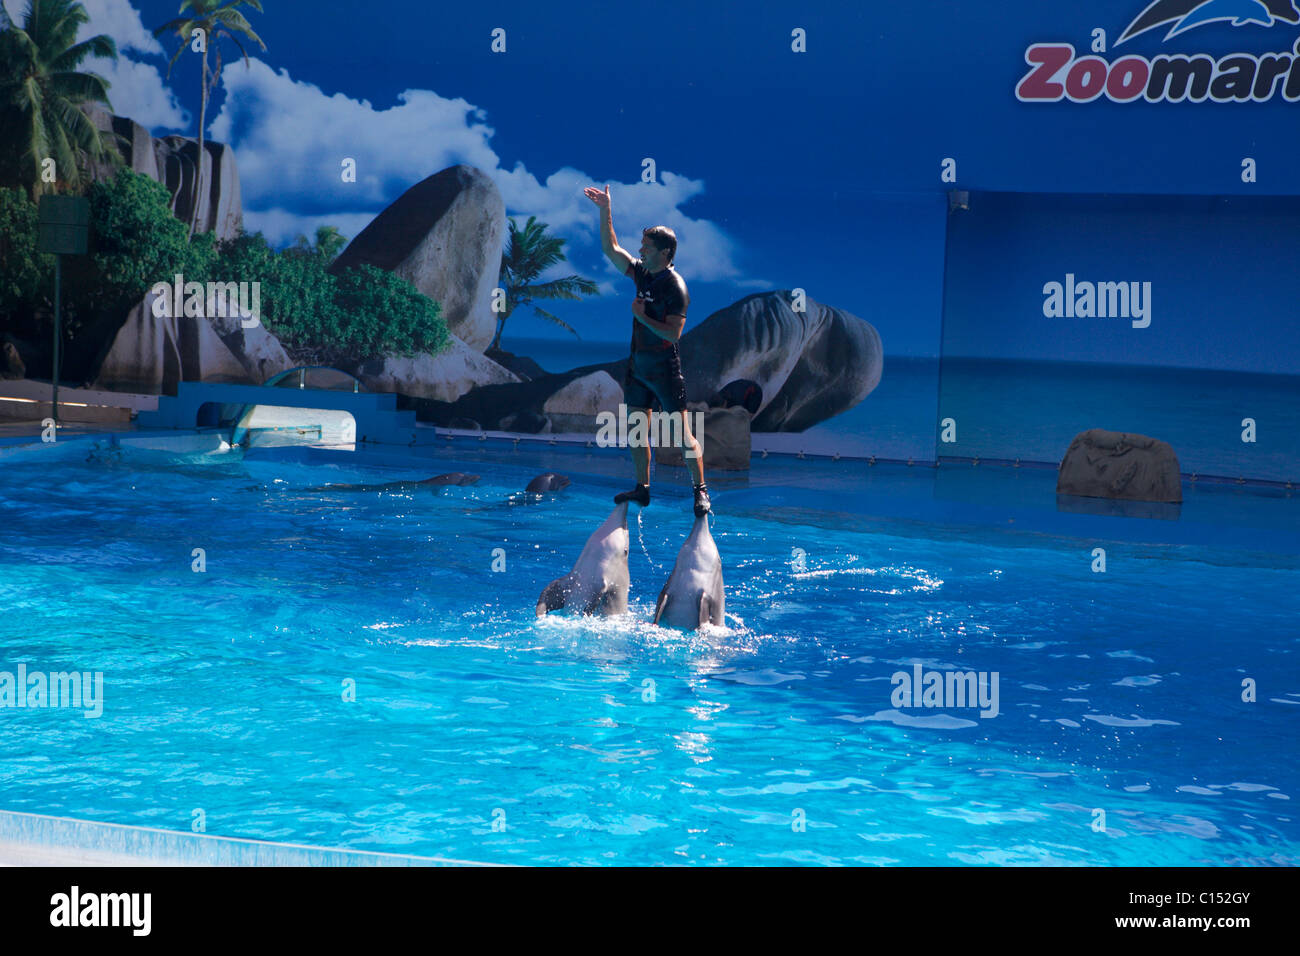 Zoo Marine in Albufeira Portugal dolphin show Stock Photo